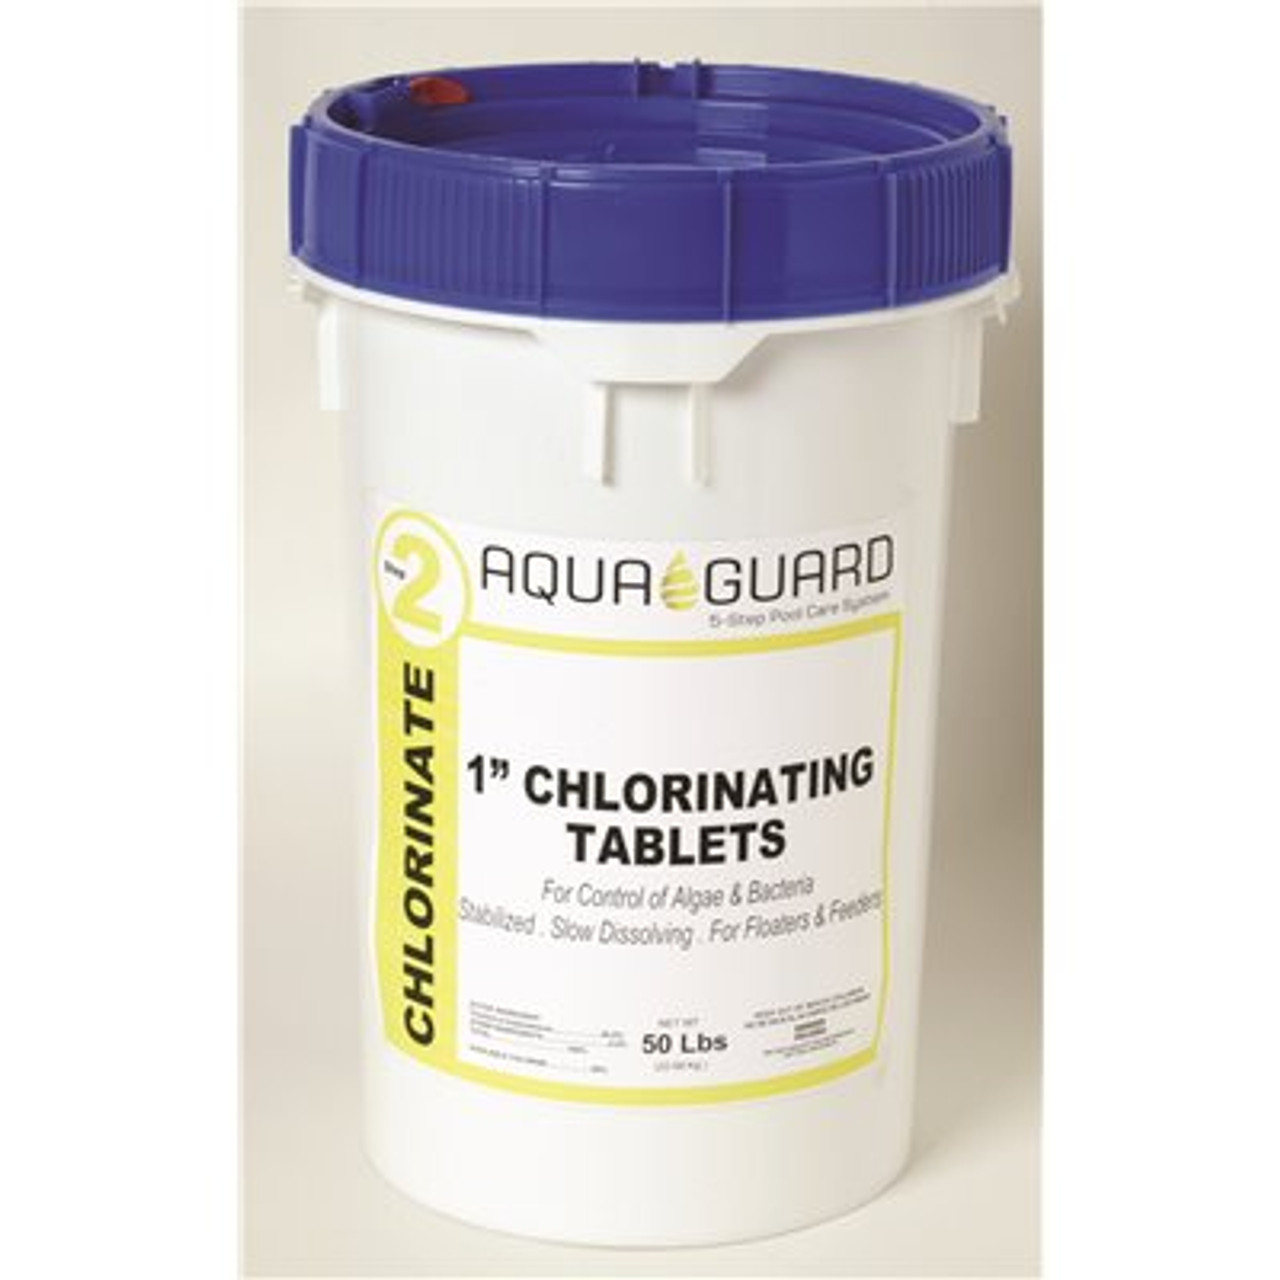 AQUAGUARD 1 in 50 Lb Trichloro Chlorine Tablets